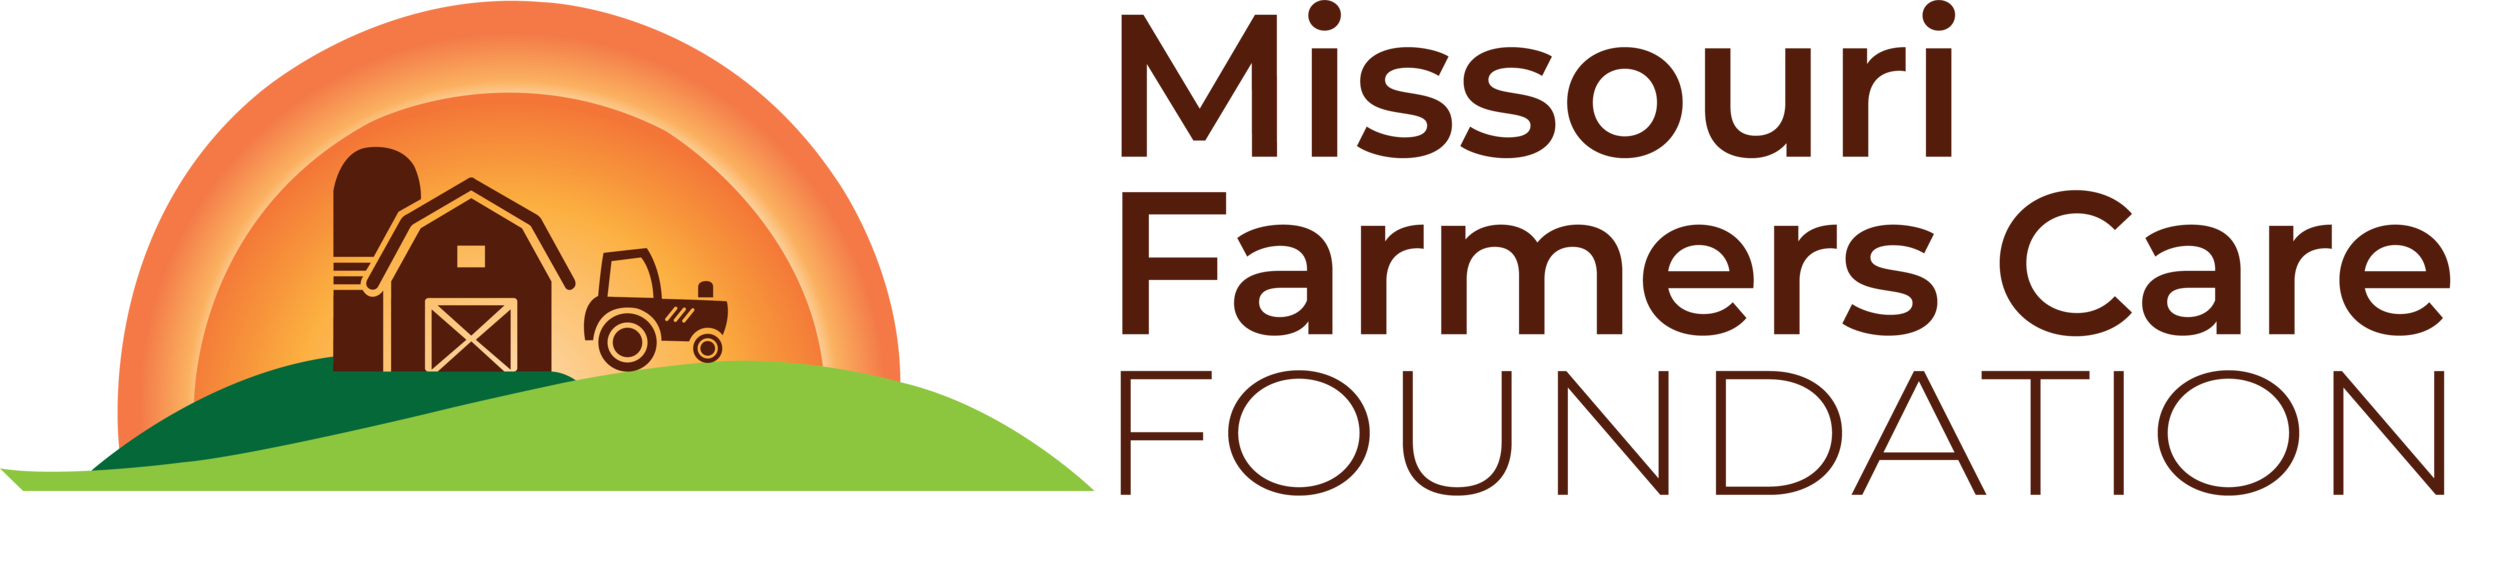 Missouri Farmers Care Foundation Logo_2020.png